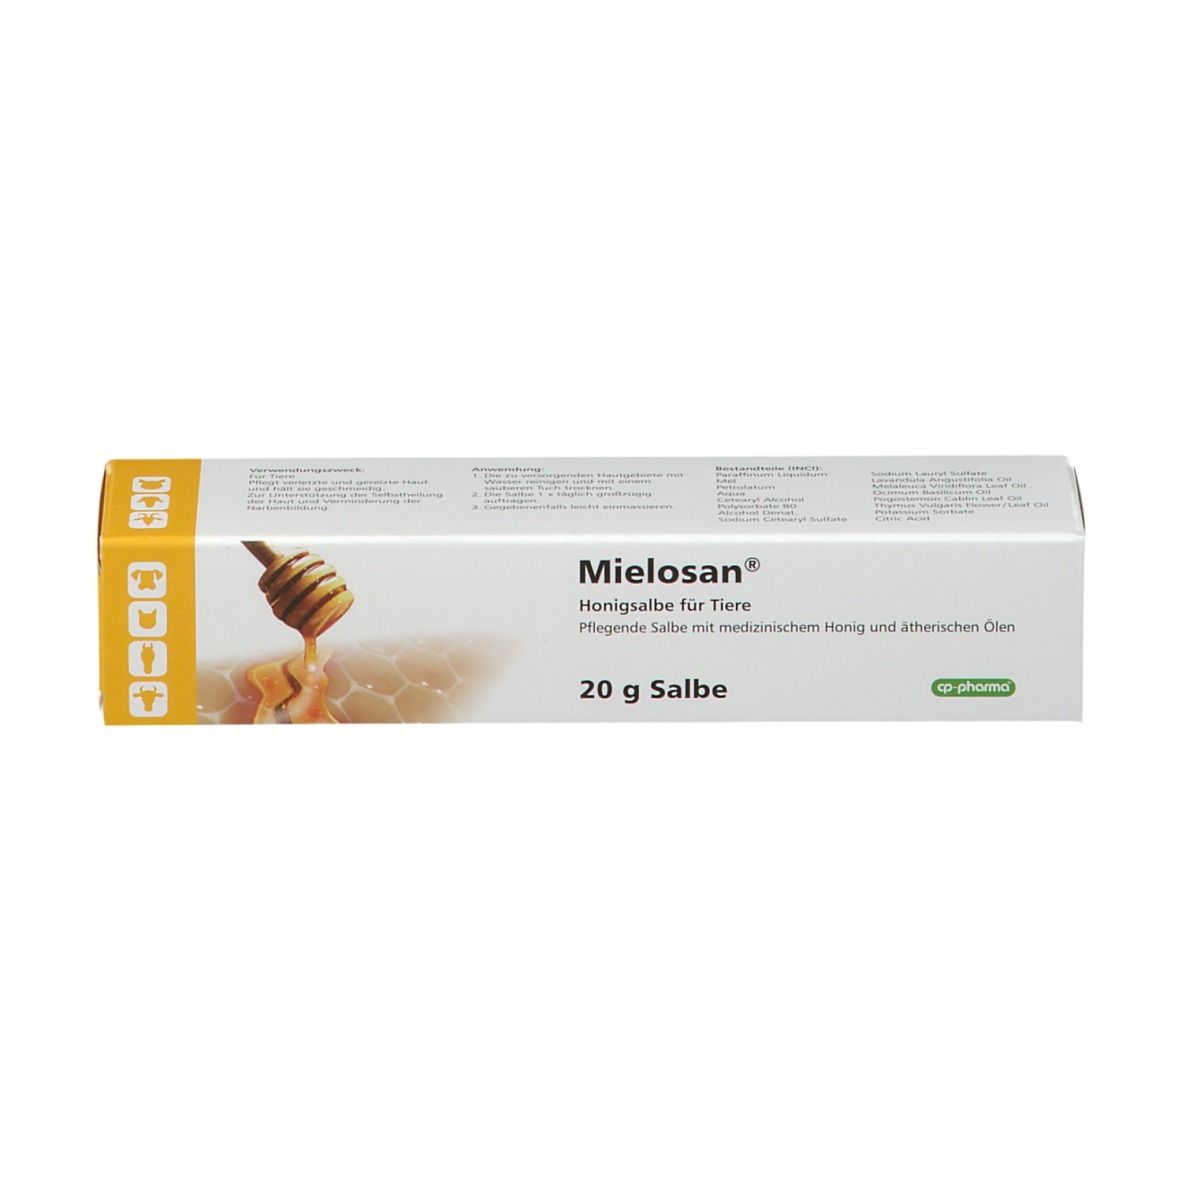 Mielosan® Honigsalbe für Tiere